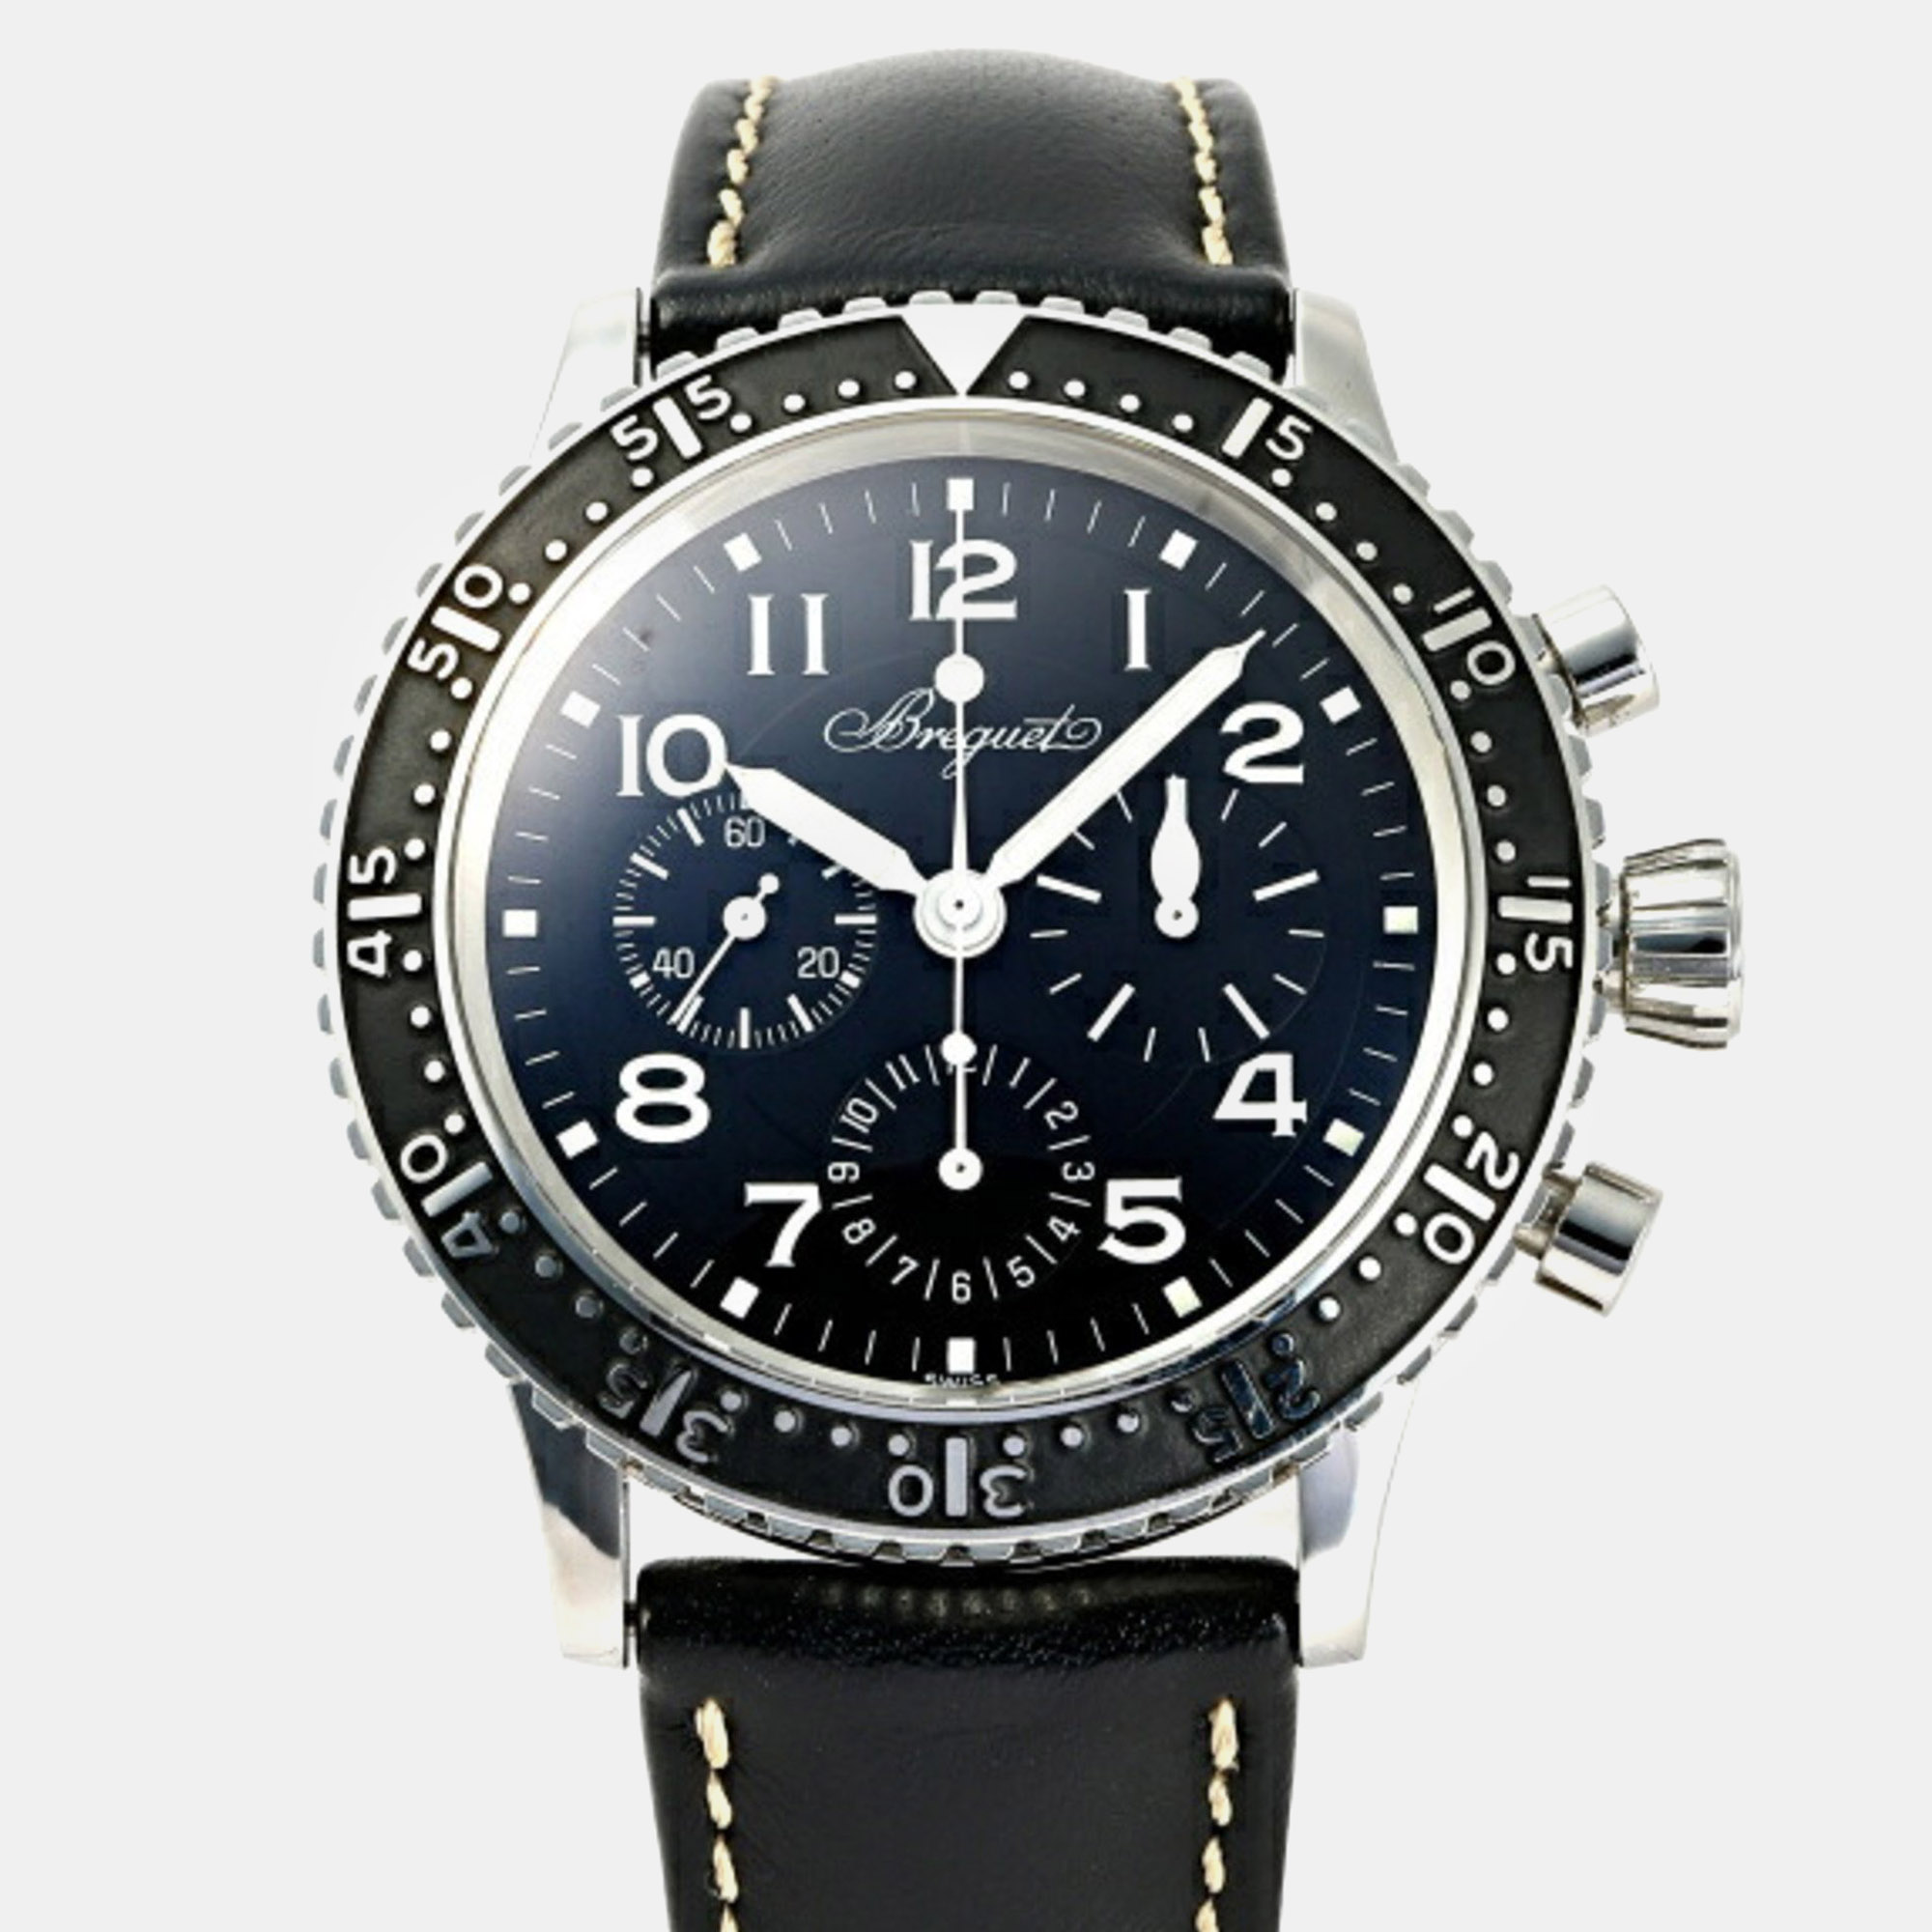 Breguet black stainless steel transaltantique  automatic men's wristwatch 39 mm